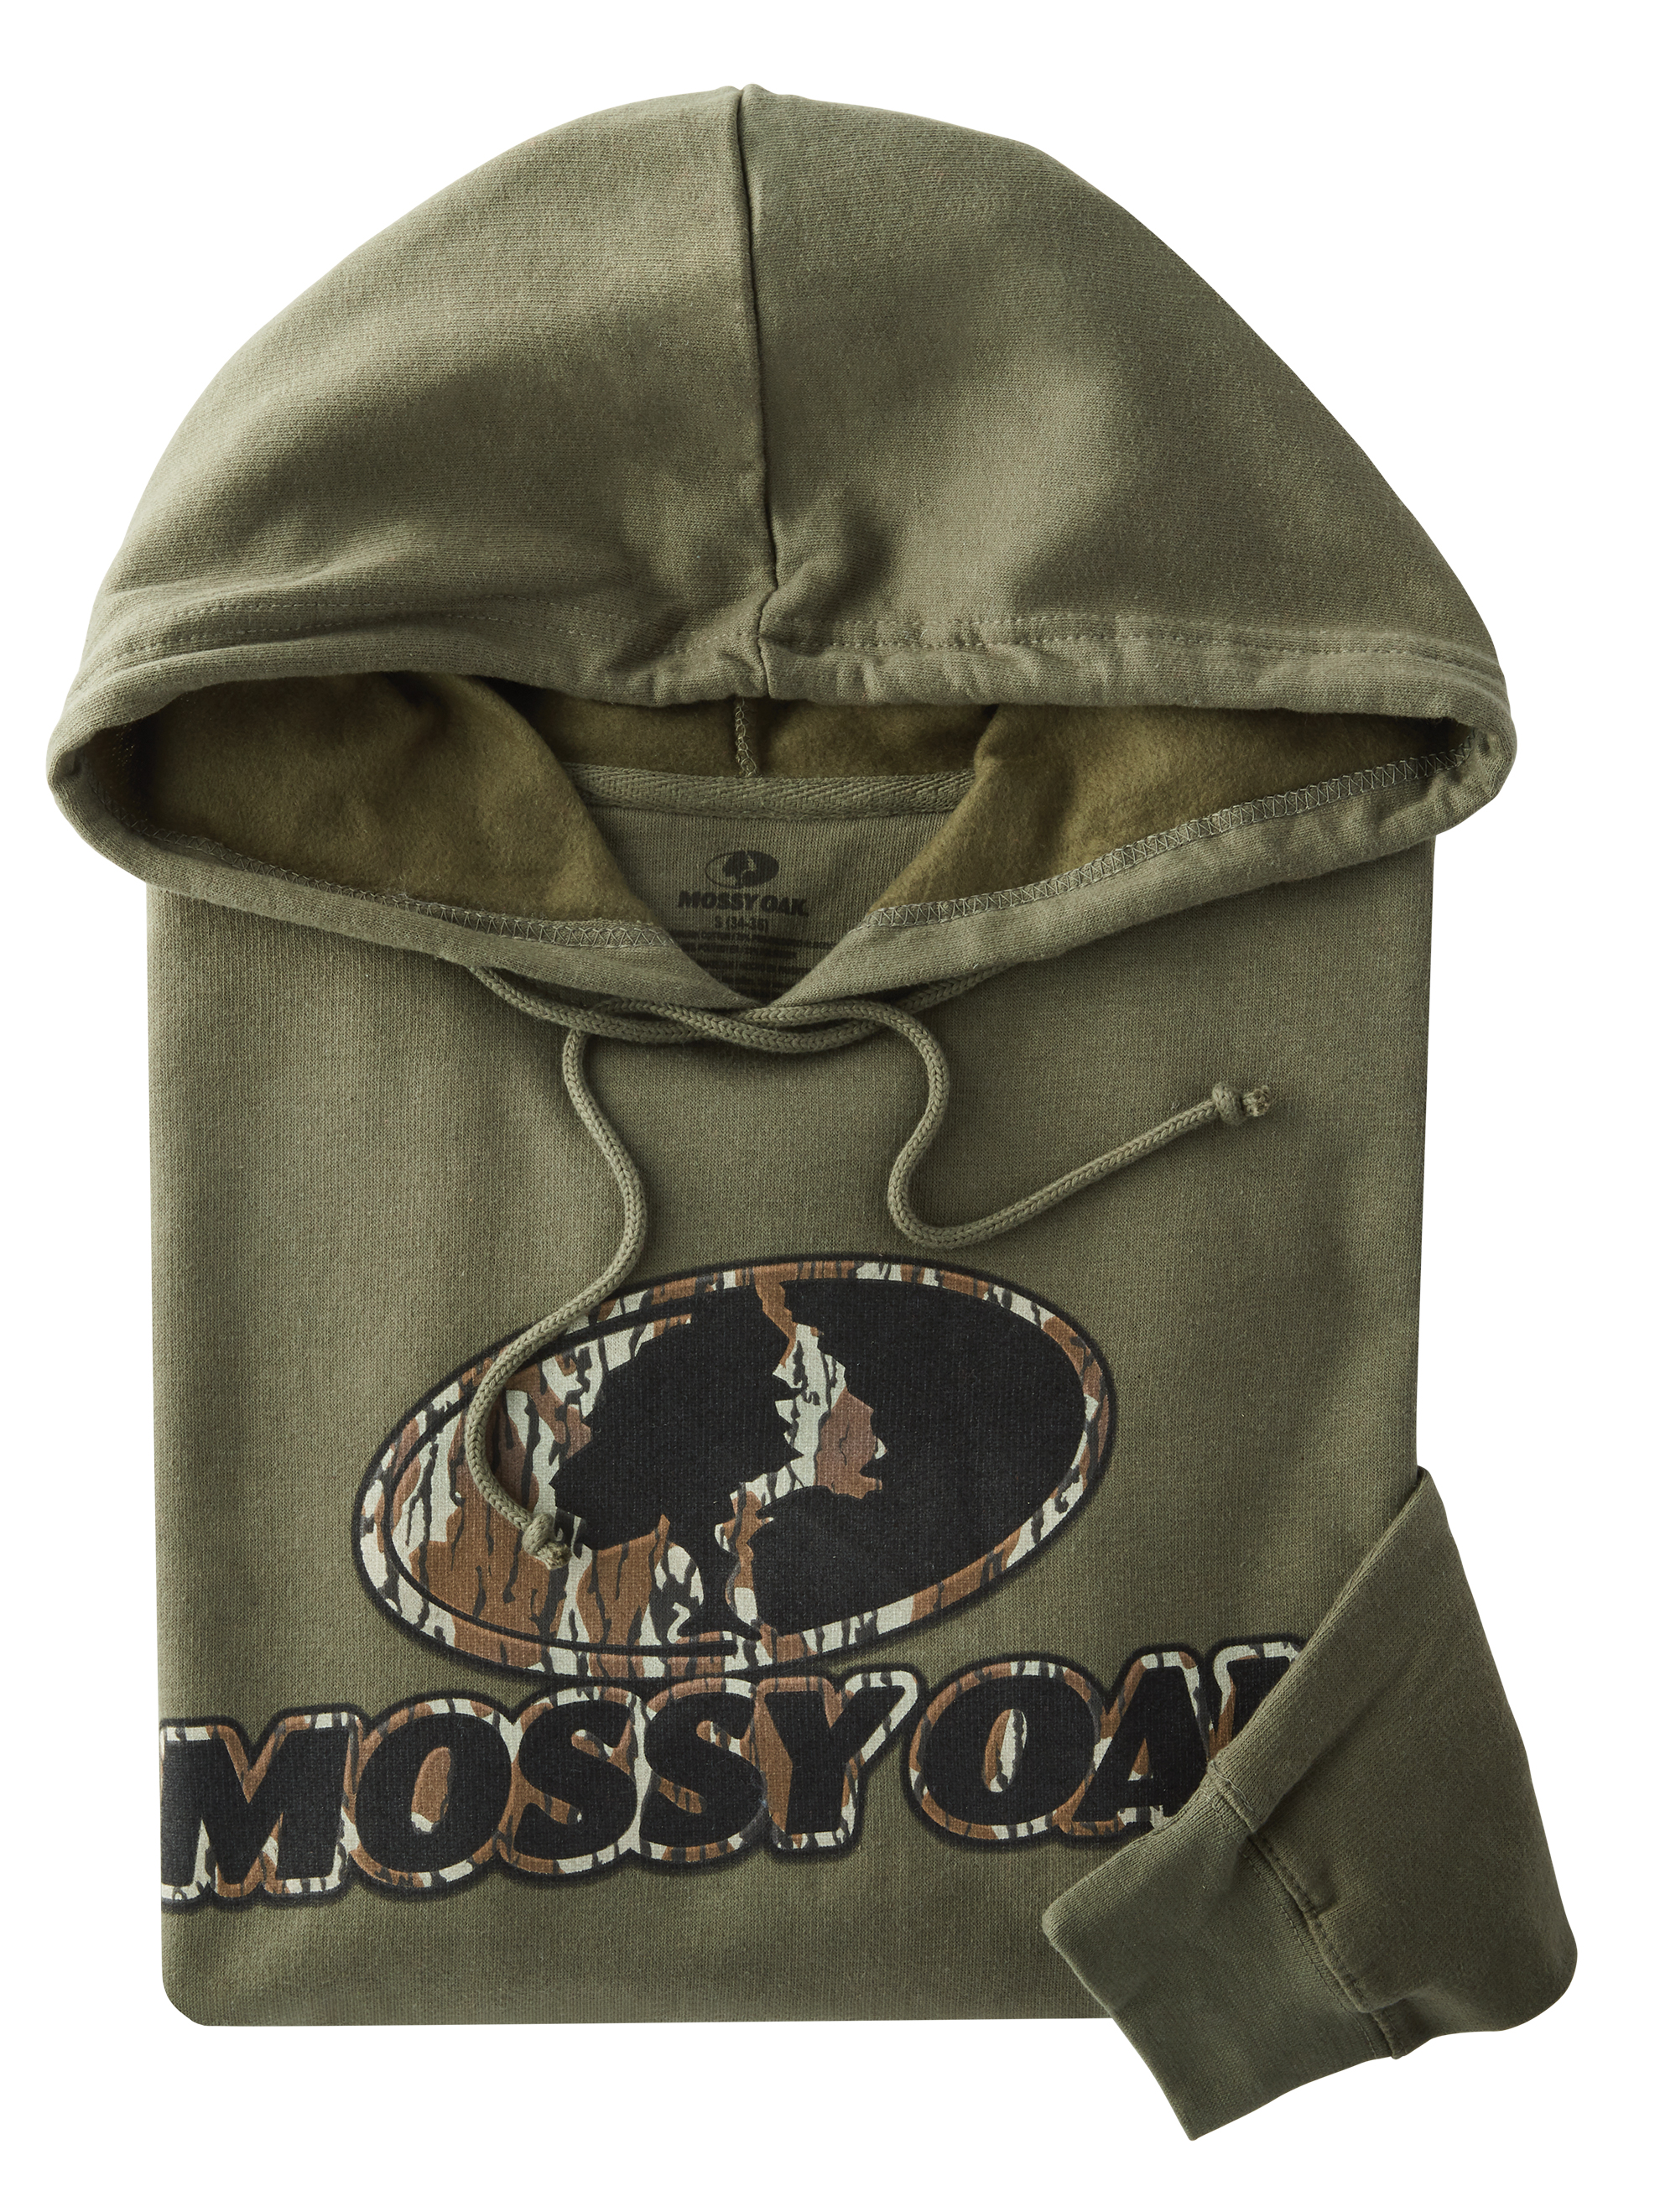 Mossy Oak Adult Pullover Hoodie, Medium, Bottomland Logo - image 2 of 2